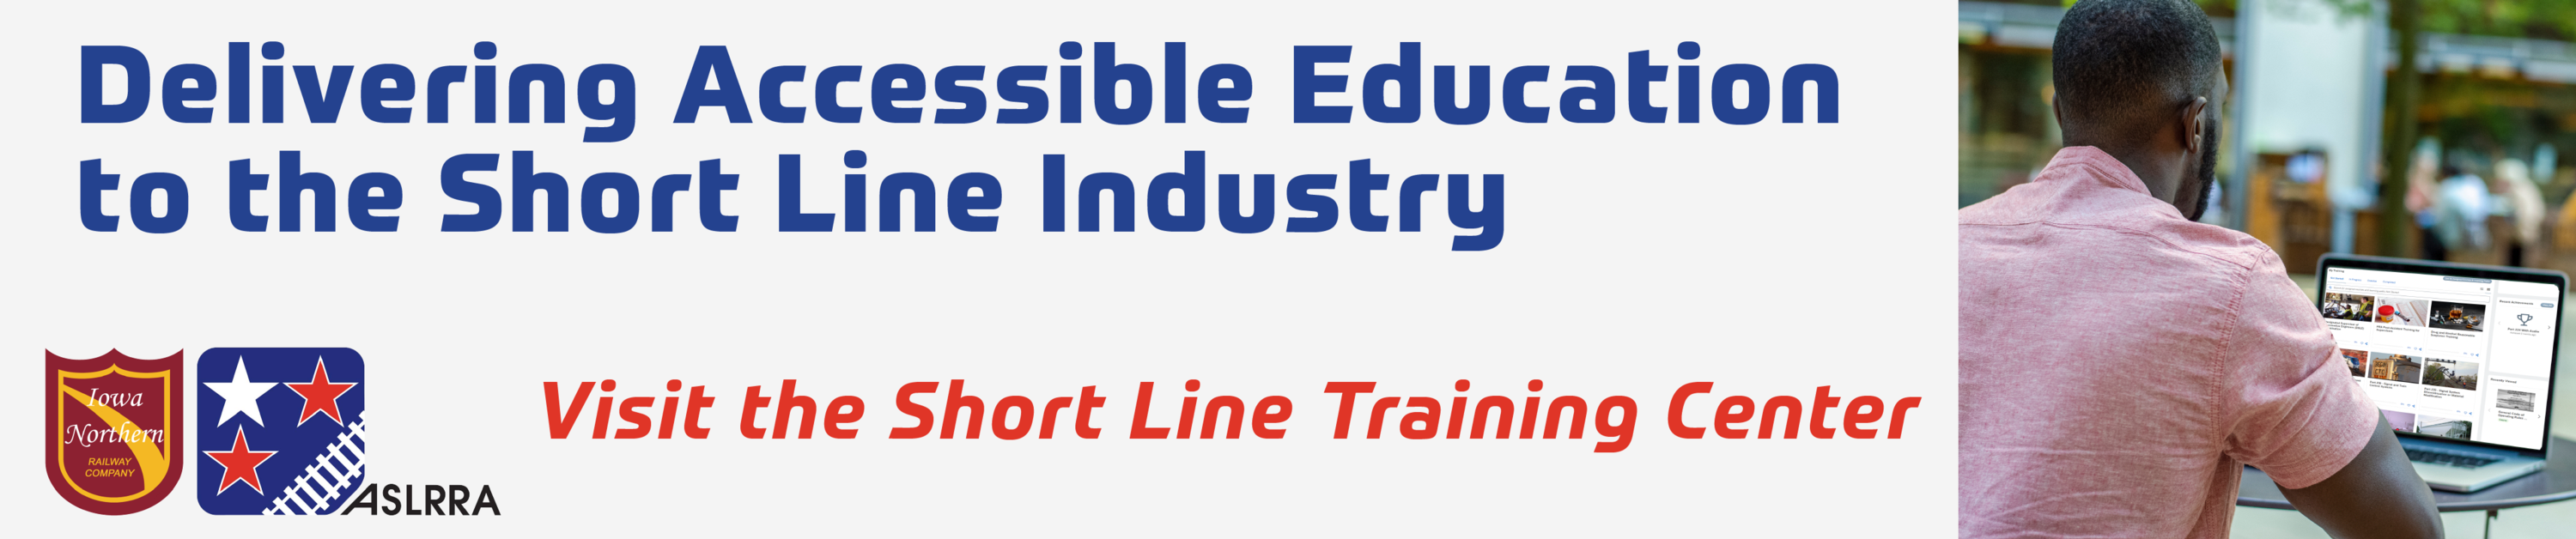 short line training center ad